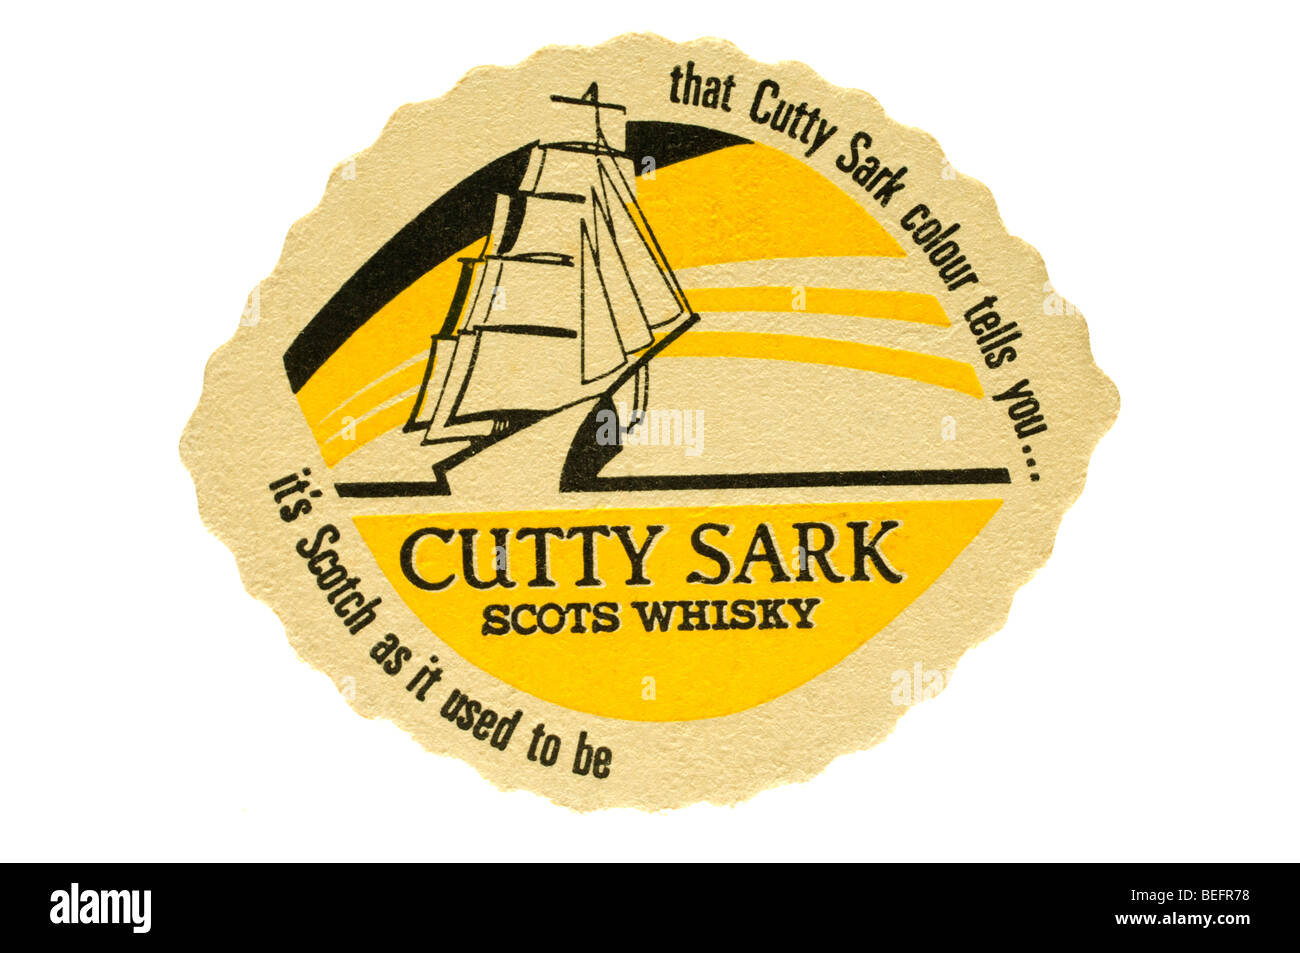 CUTTY SARK BLENDED SCOTCH WHISKY CUTTER SHIP LOGO PROMO ENAMEL LAPEL PIN